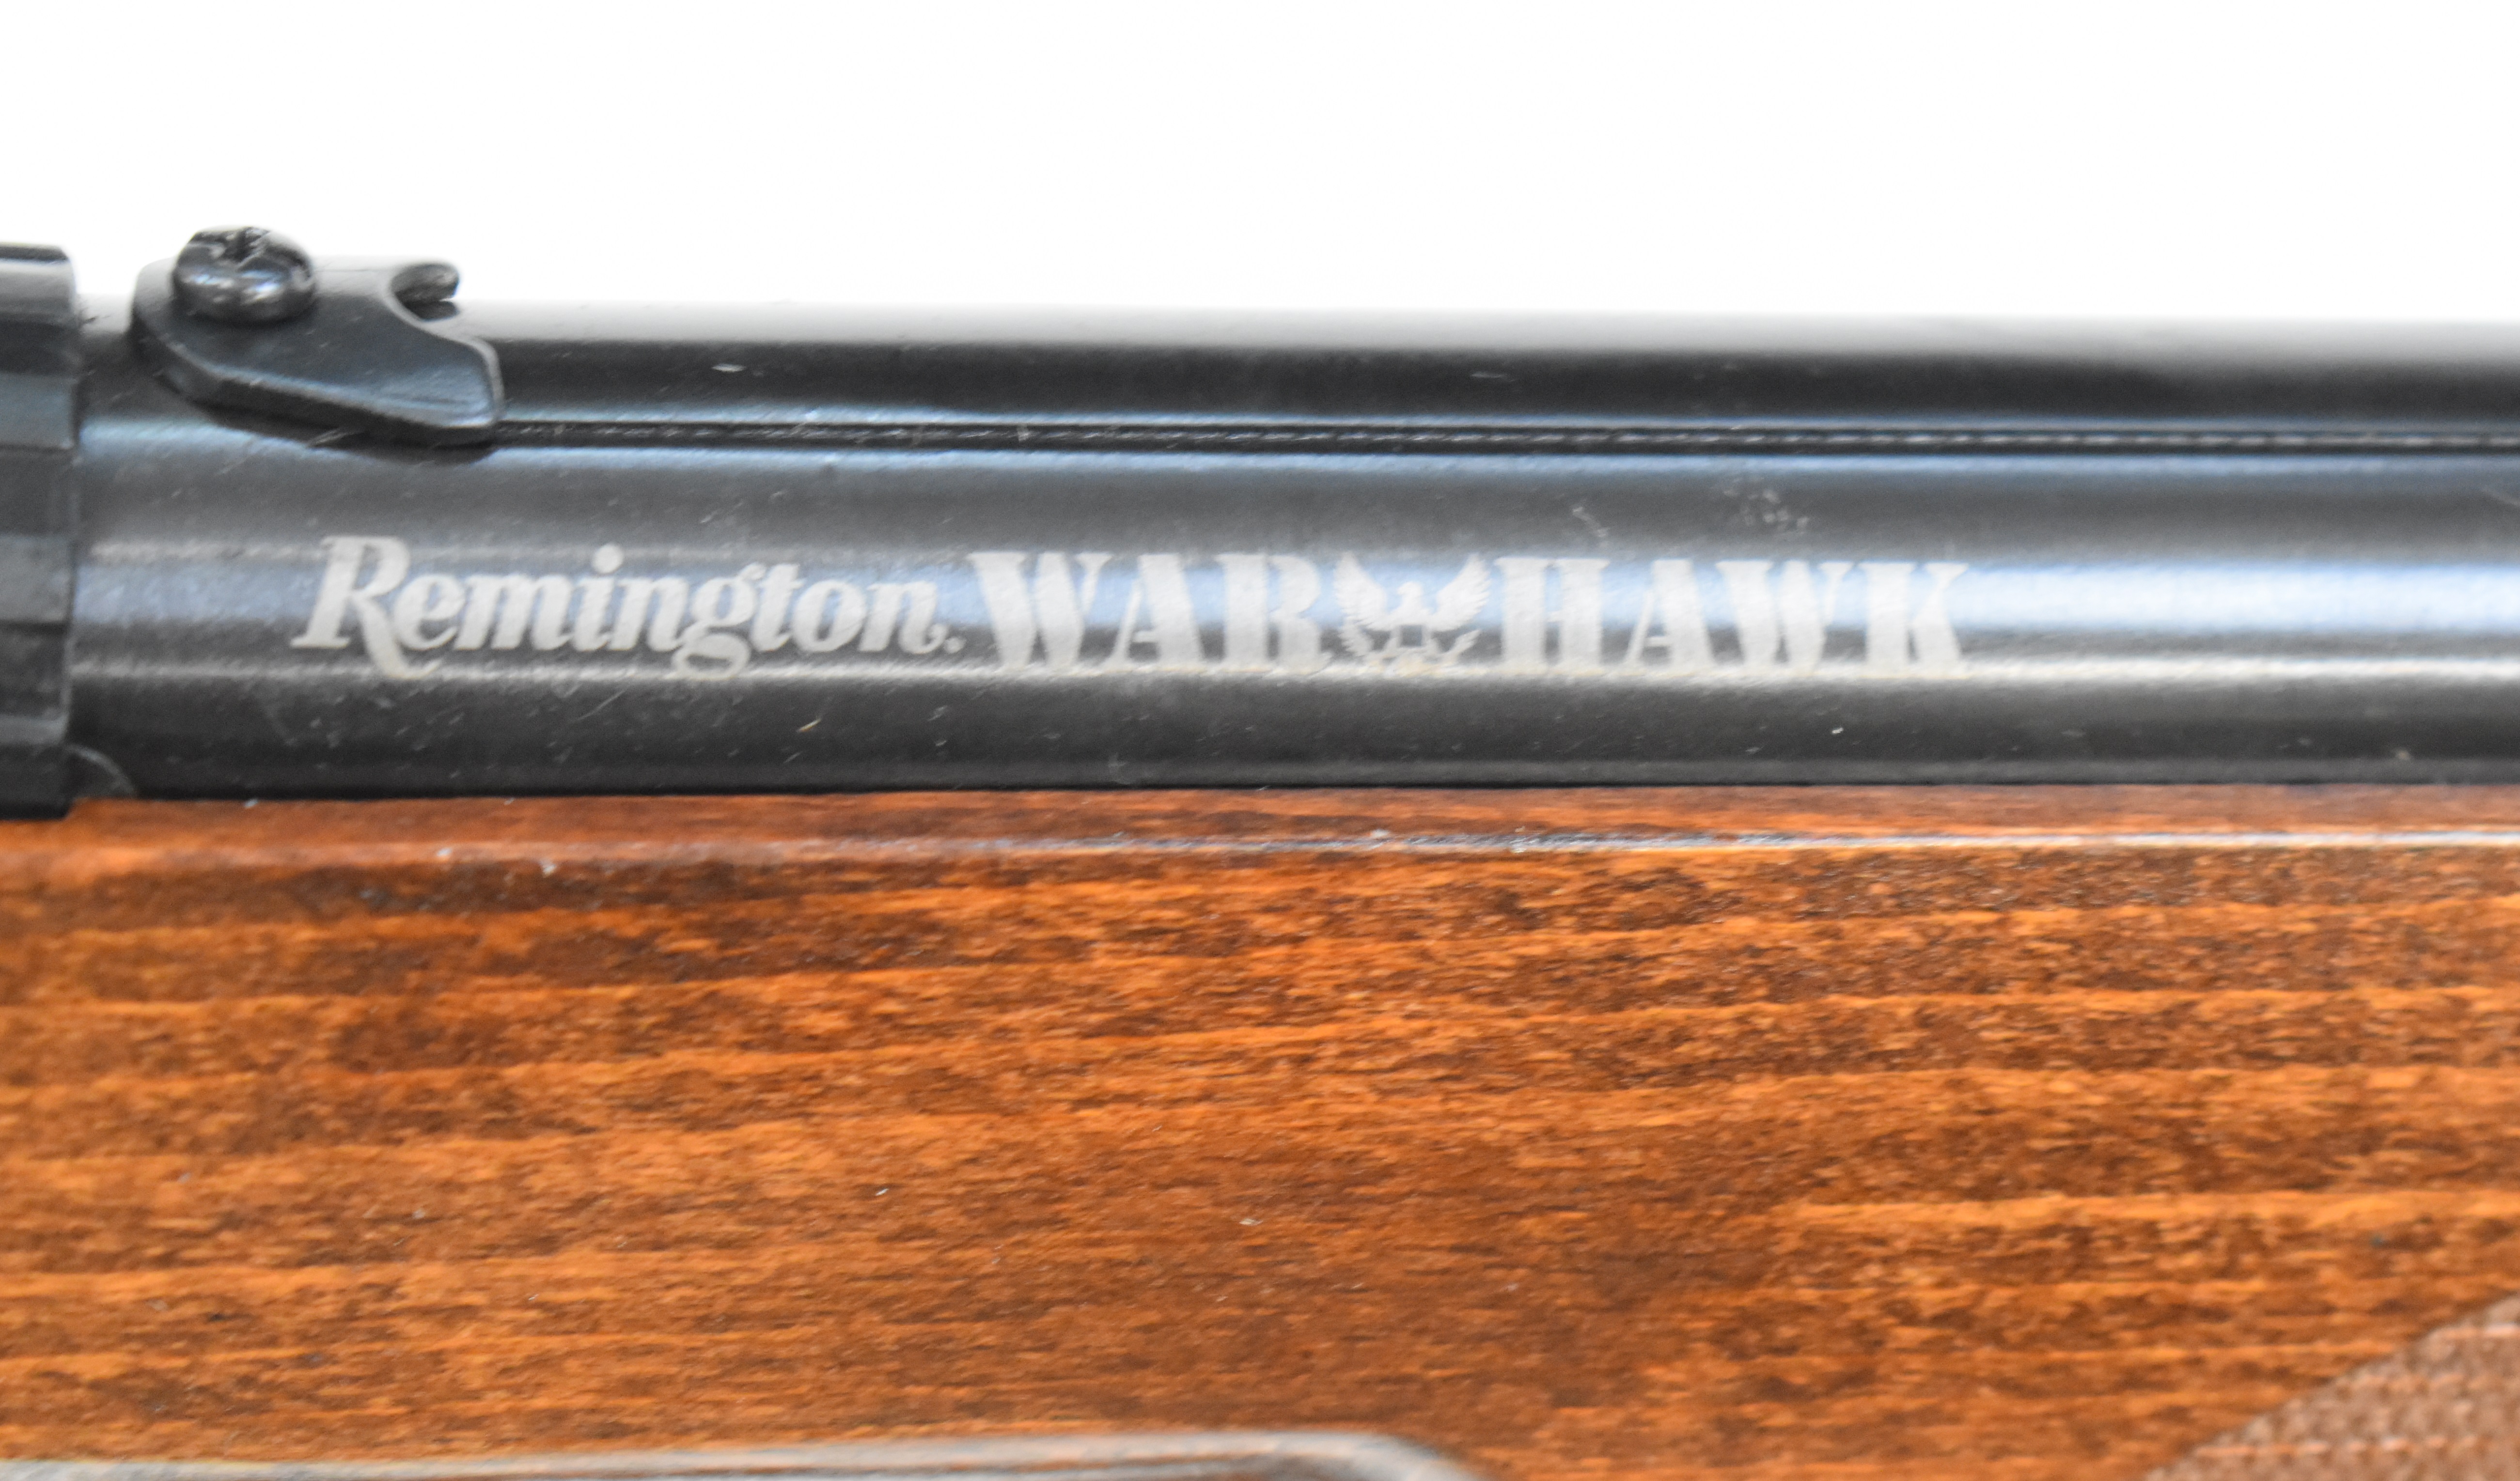 Remington Warhawk .177 under-lever air rifle with textured semi-pistol grip, raised cheek piece - Image 6 of 10